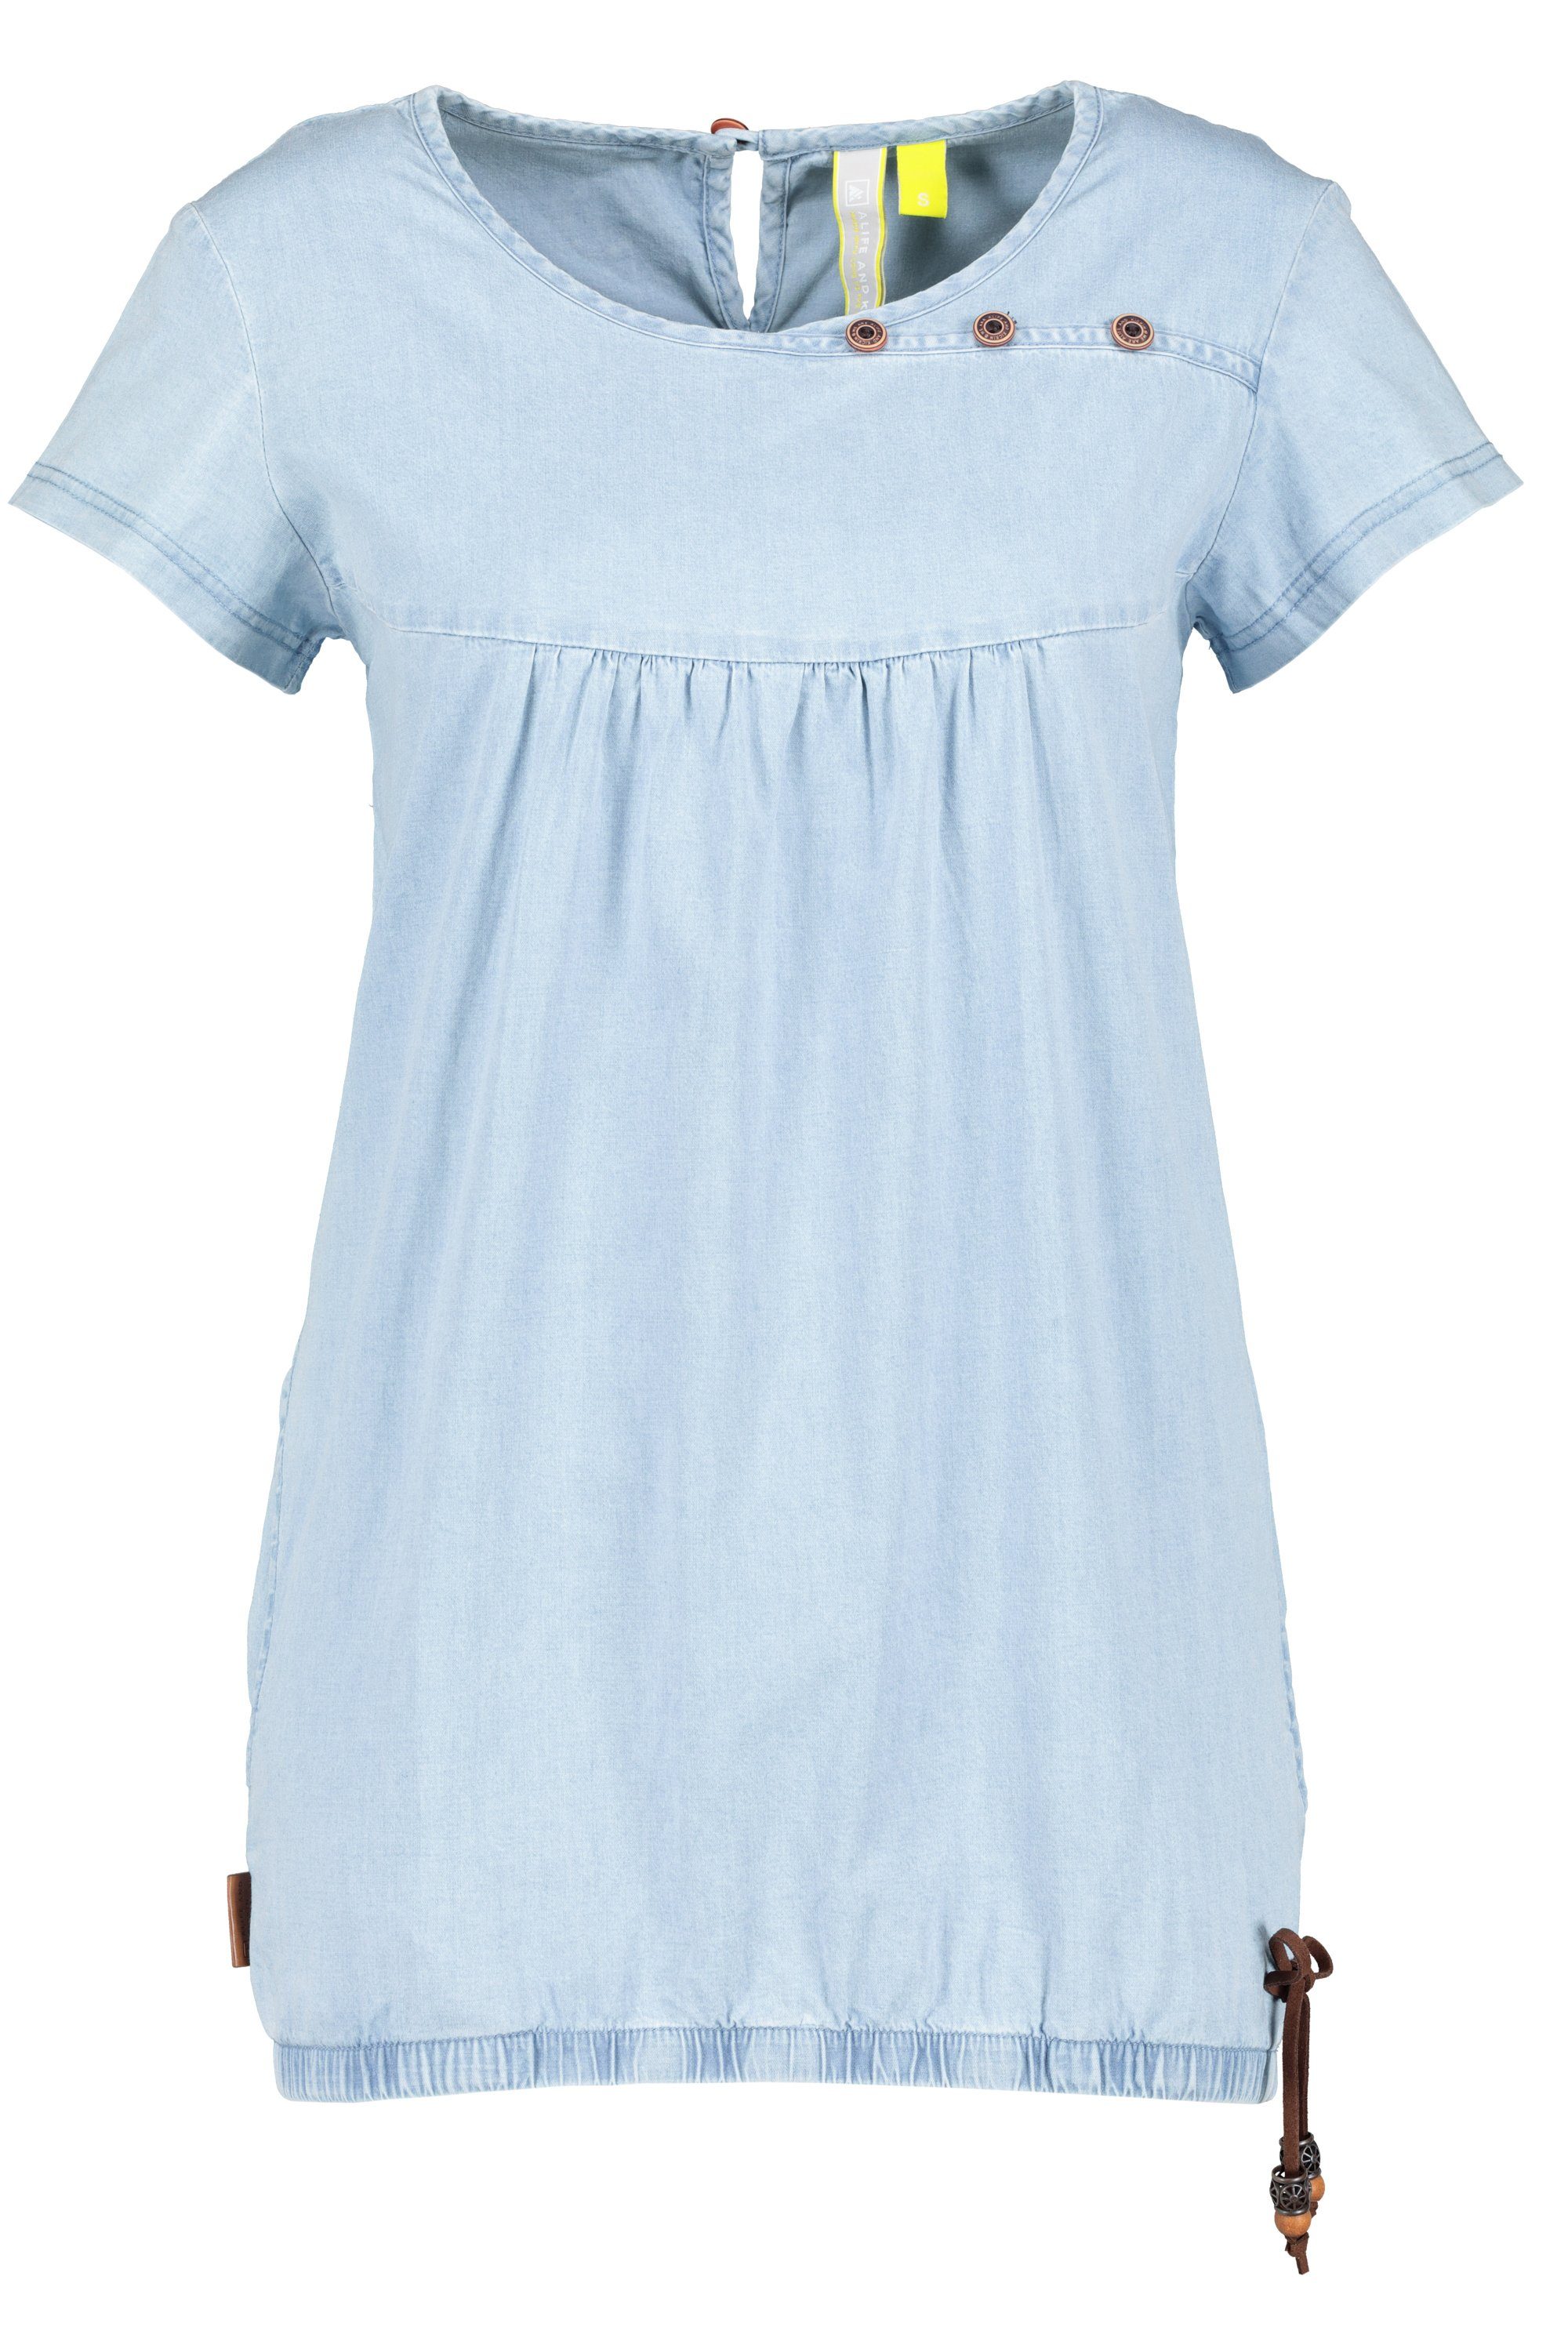 DNM Shirt Alife Damen light & Kickin SummerAK denim T-Shirt